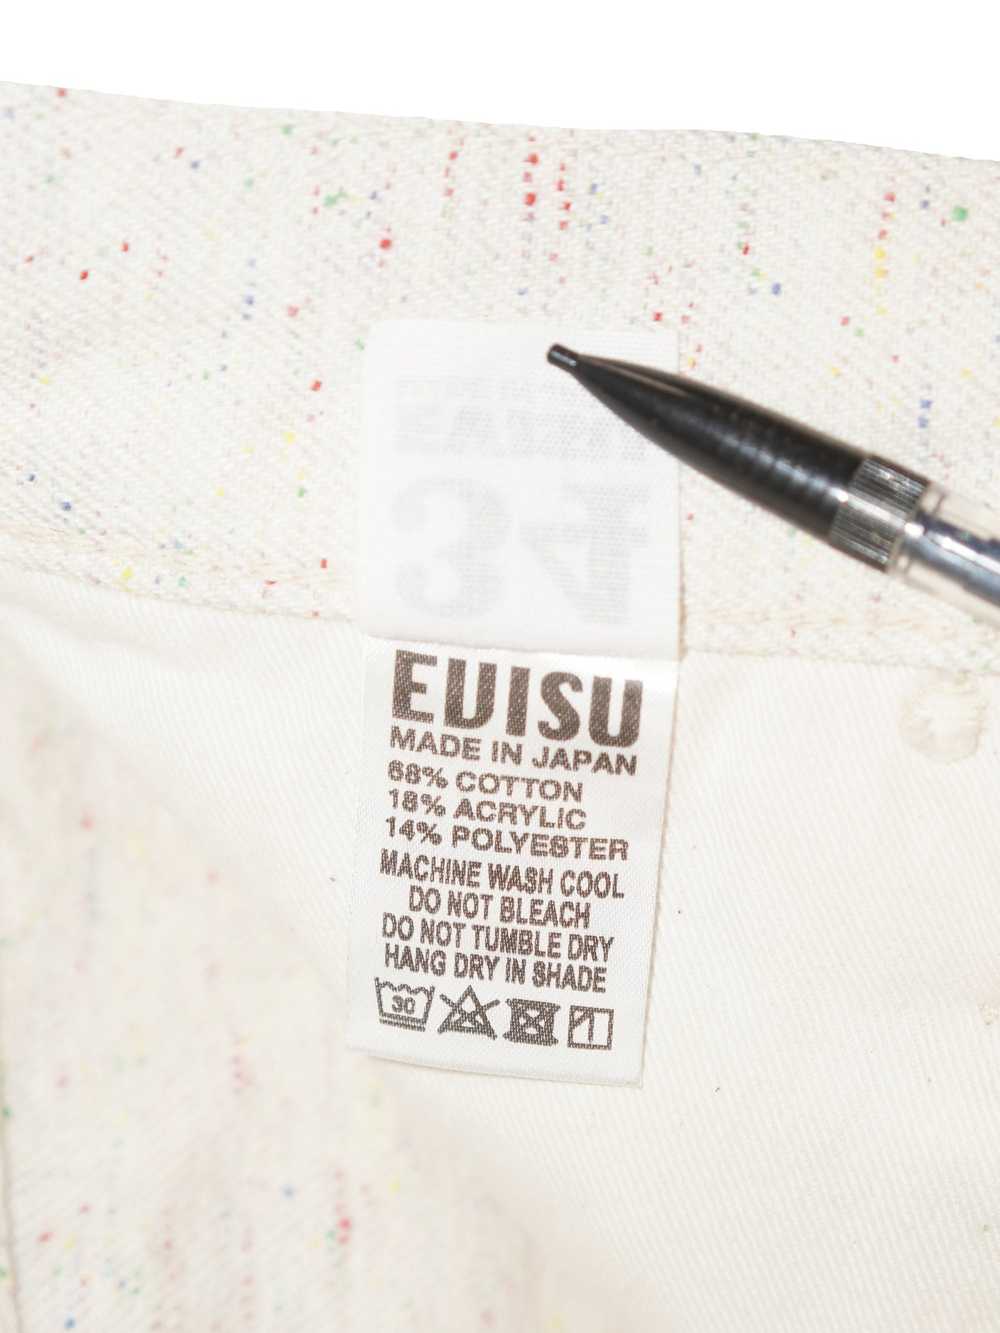 Evisu Multicolor Tweed White Denim Jeans Pants - image 9